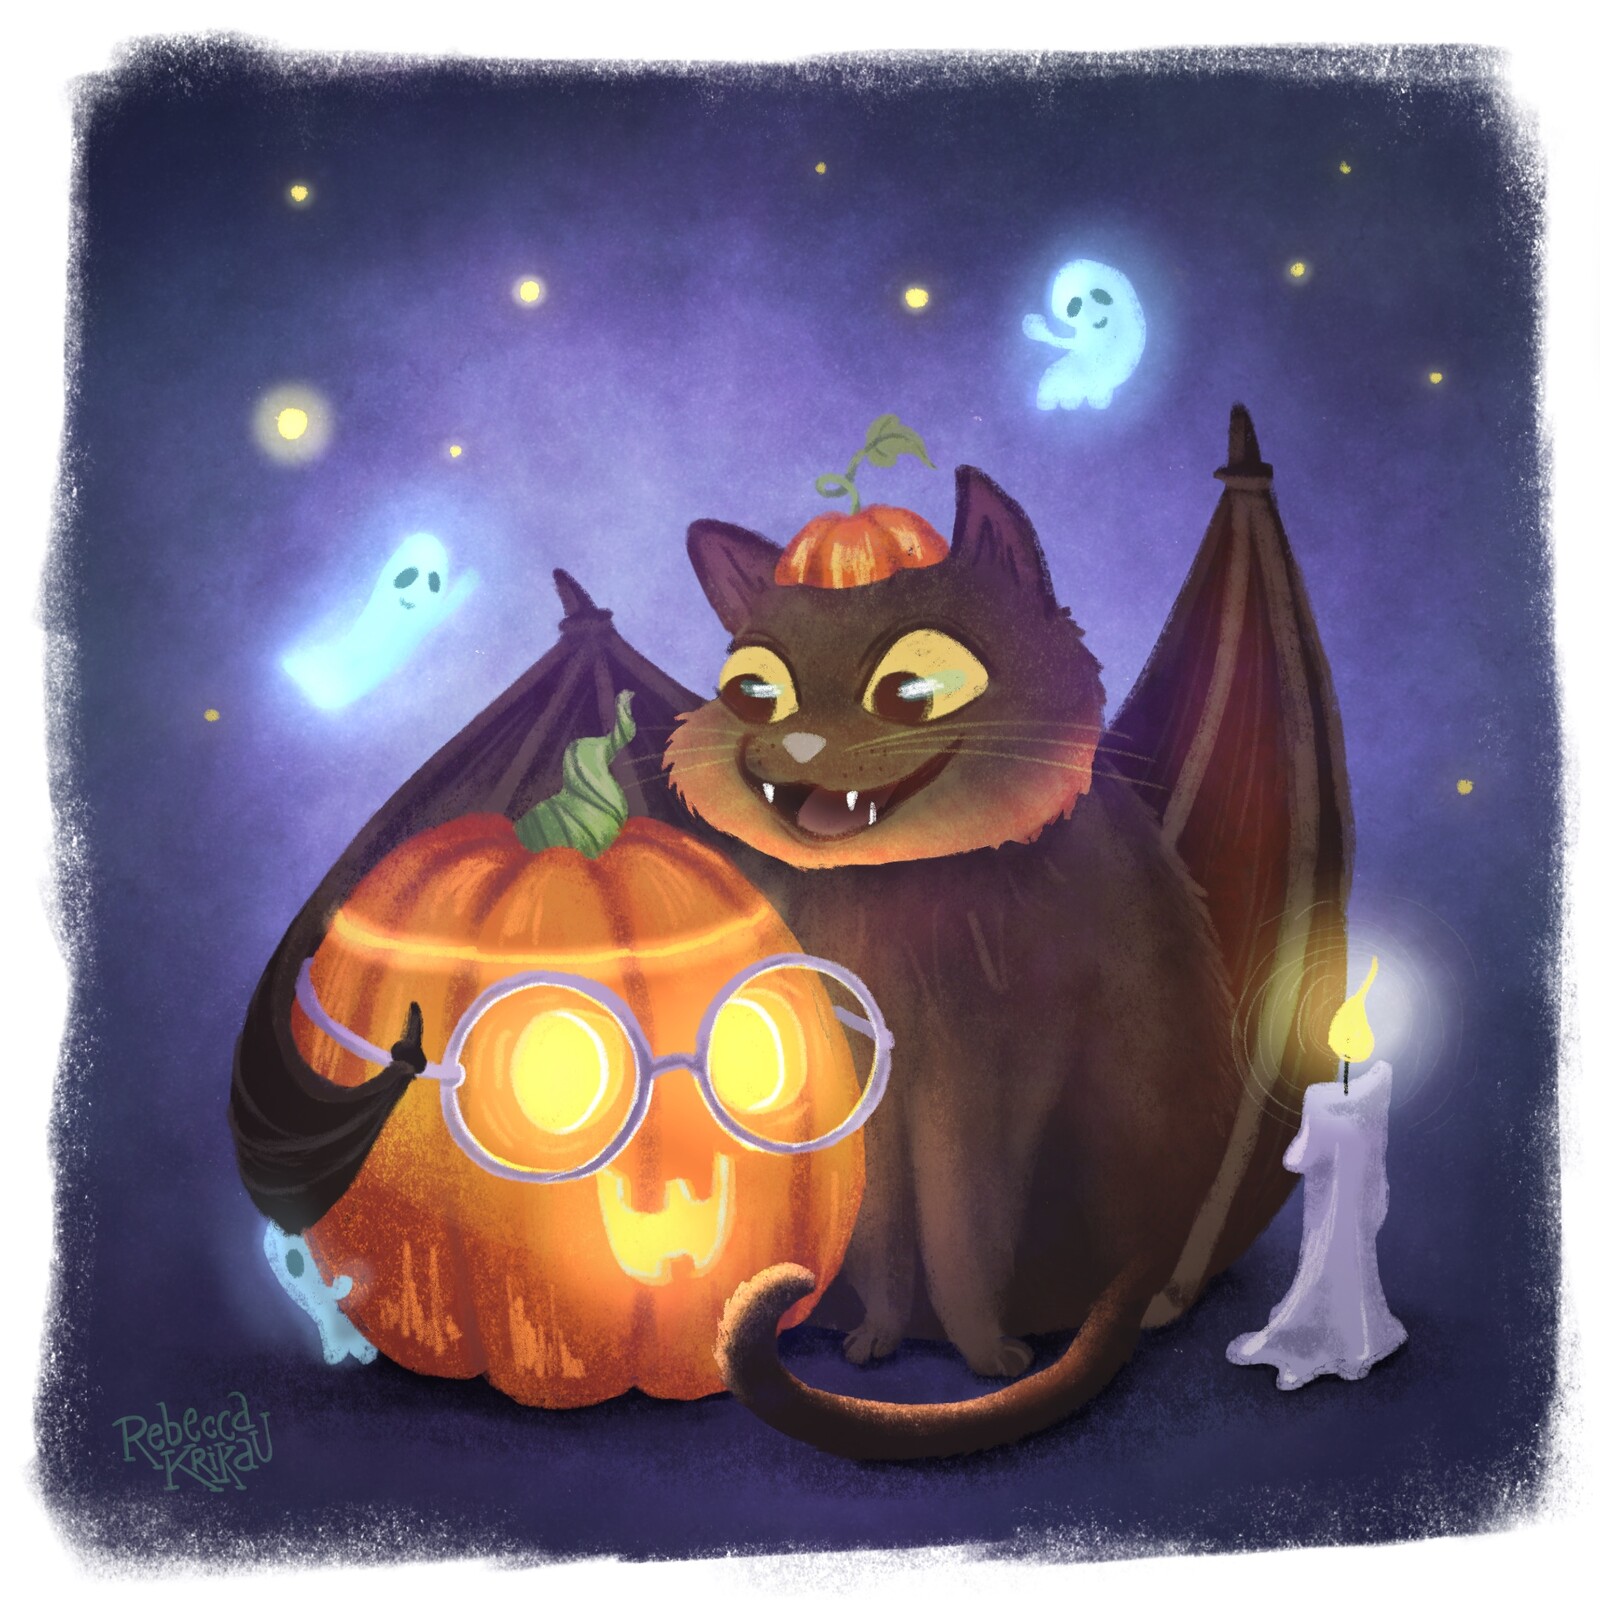 Salem celebrating Halloween 